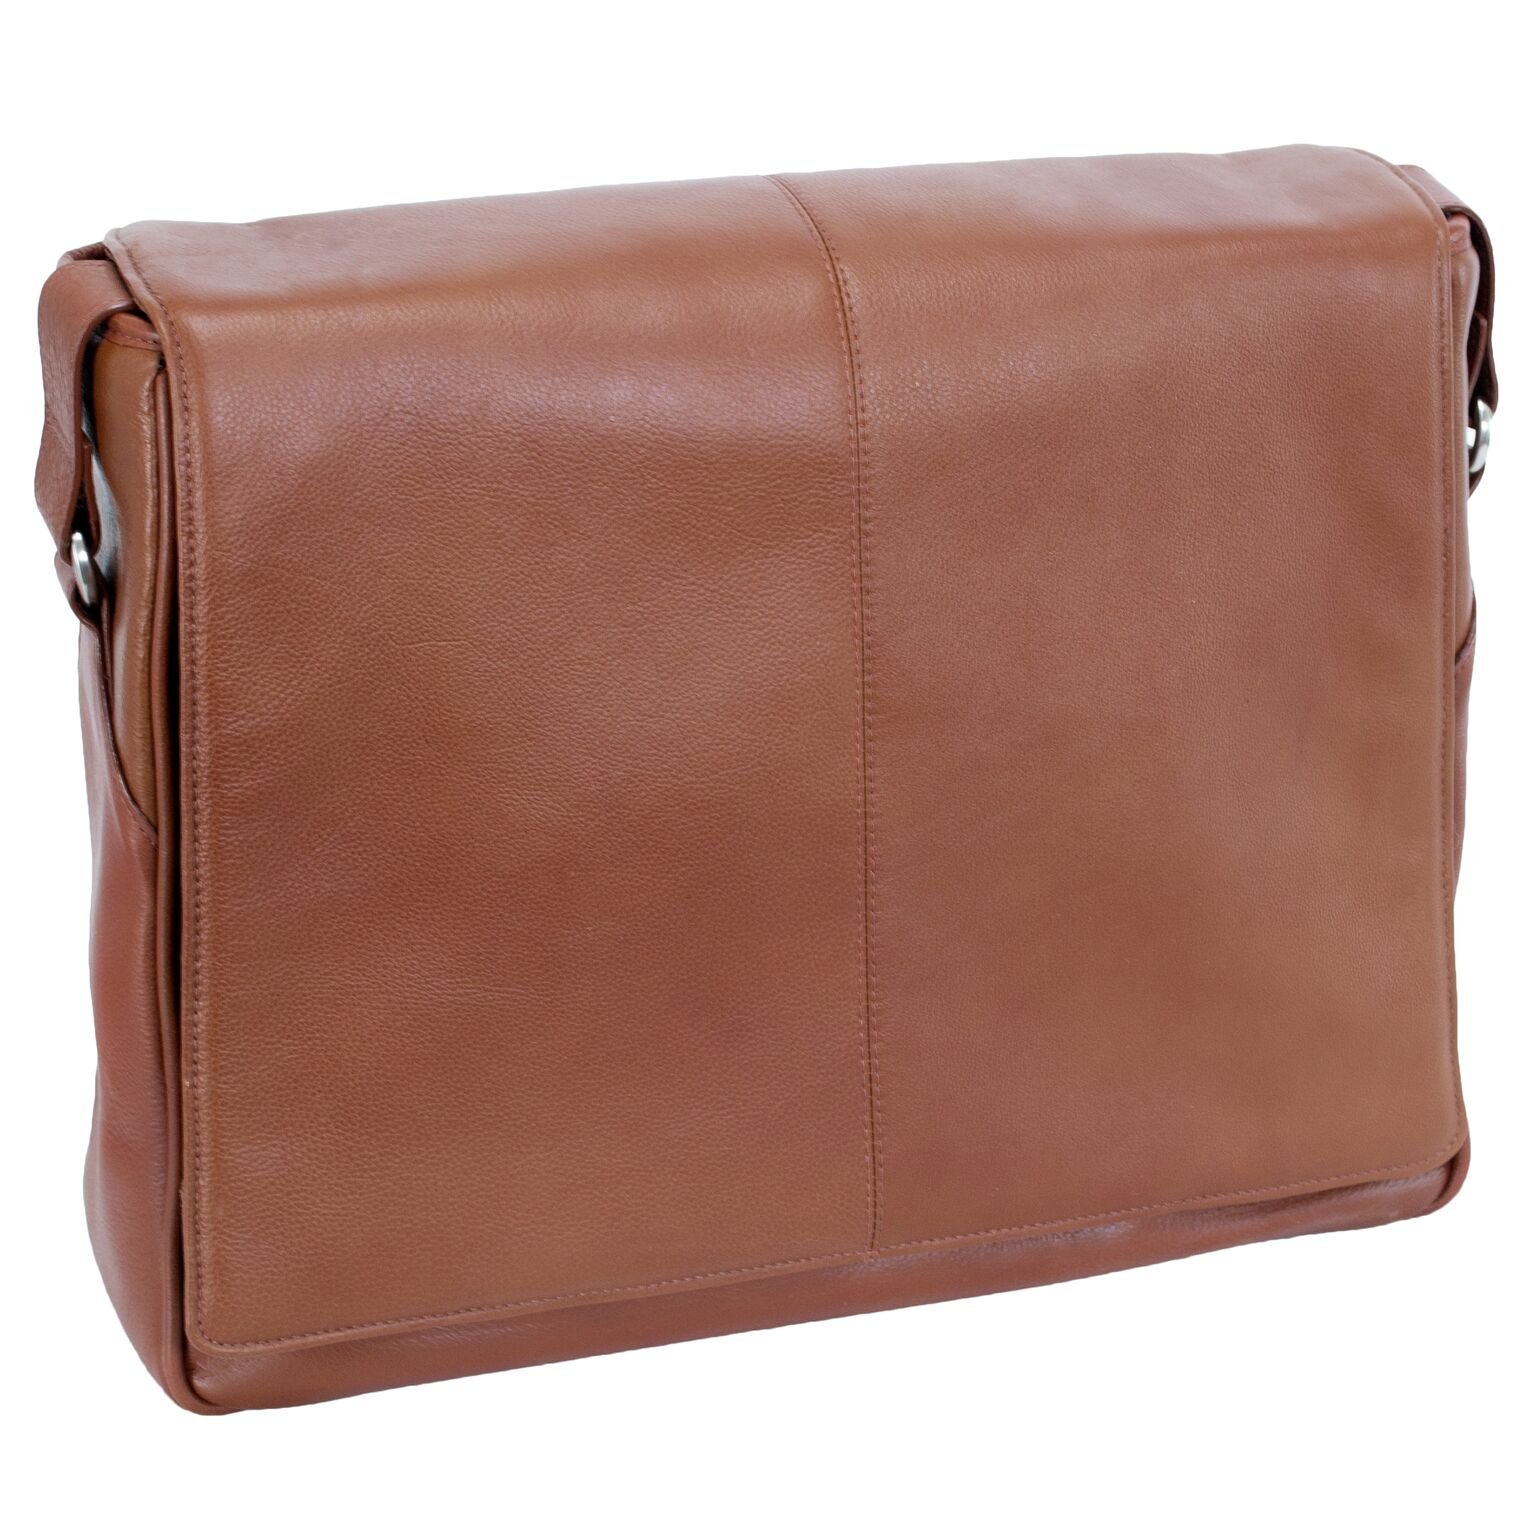 Picture of McKlein 45354 San Francesco Cognac Leather Messenger Bag